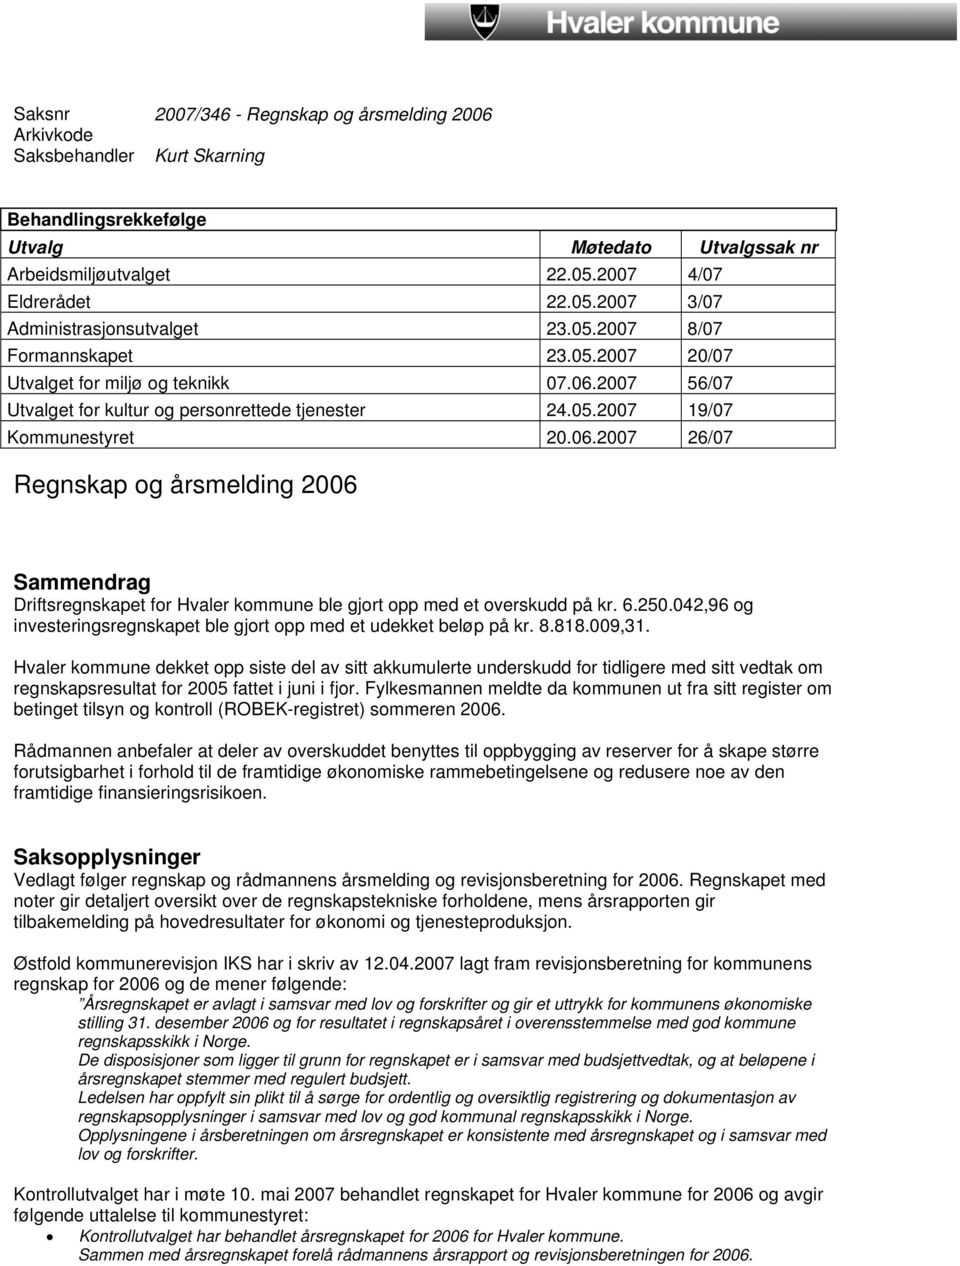 2007 56/07 Utvalget for kultur og personrettede tjenester 24.05.2007 19/07 Kommunestyret 20.06.